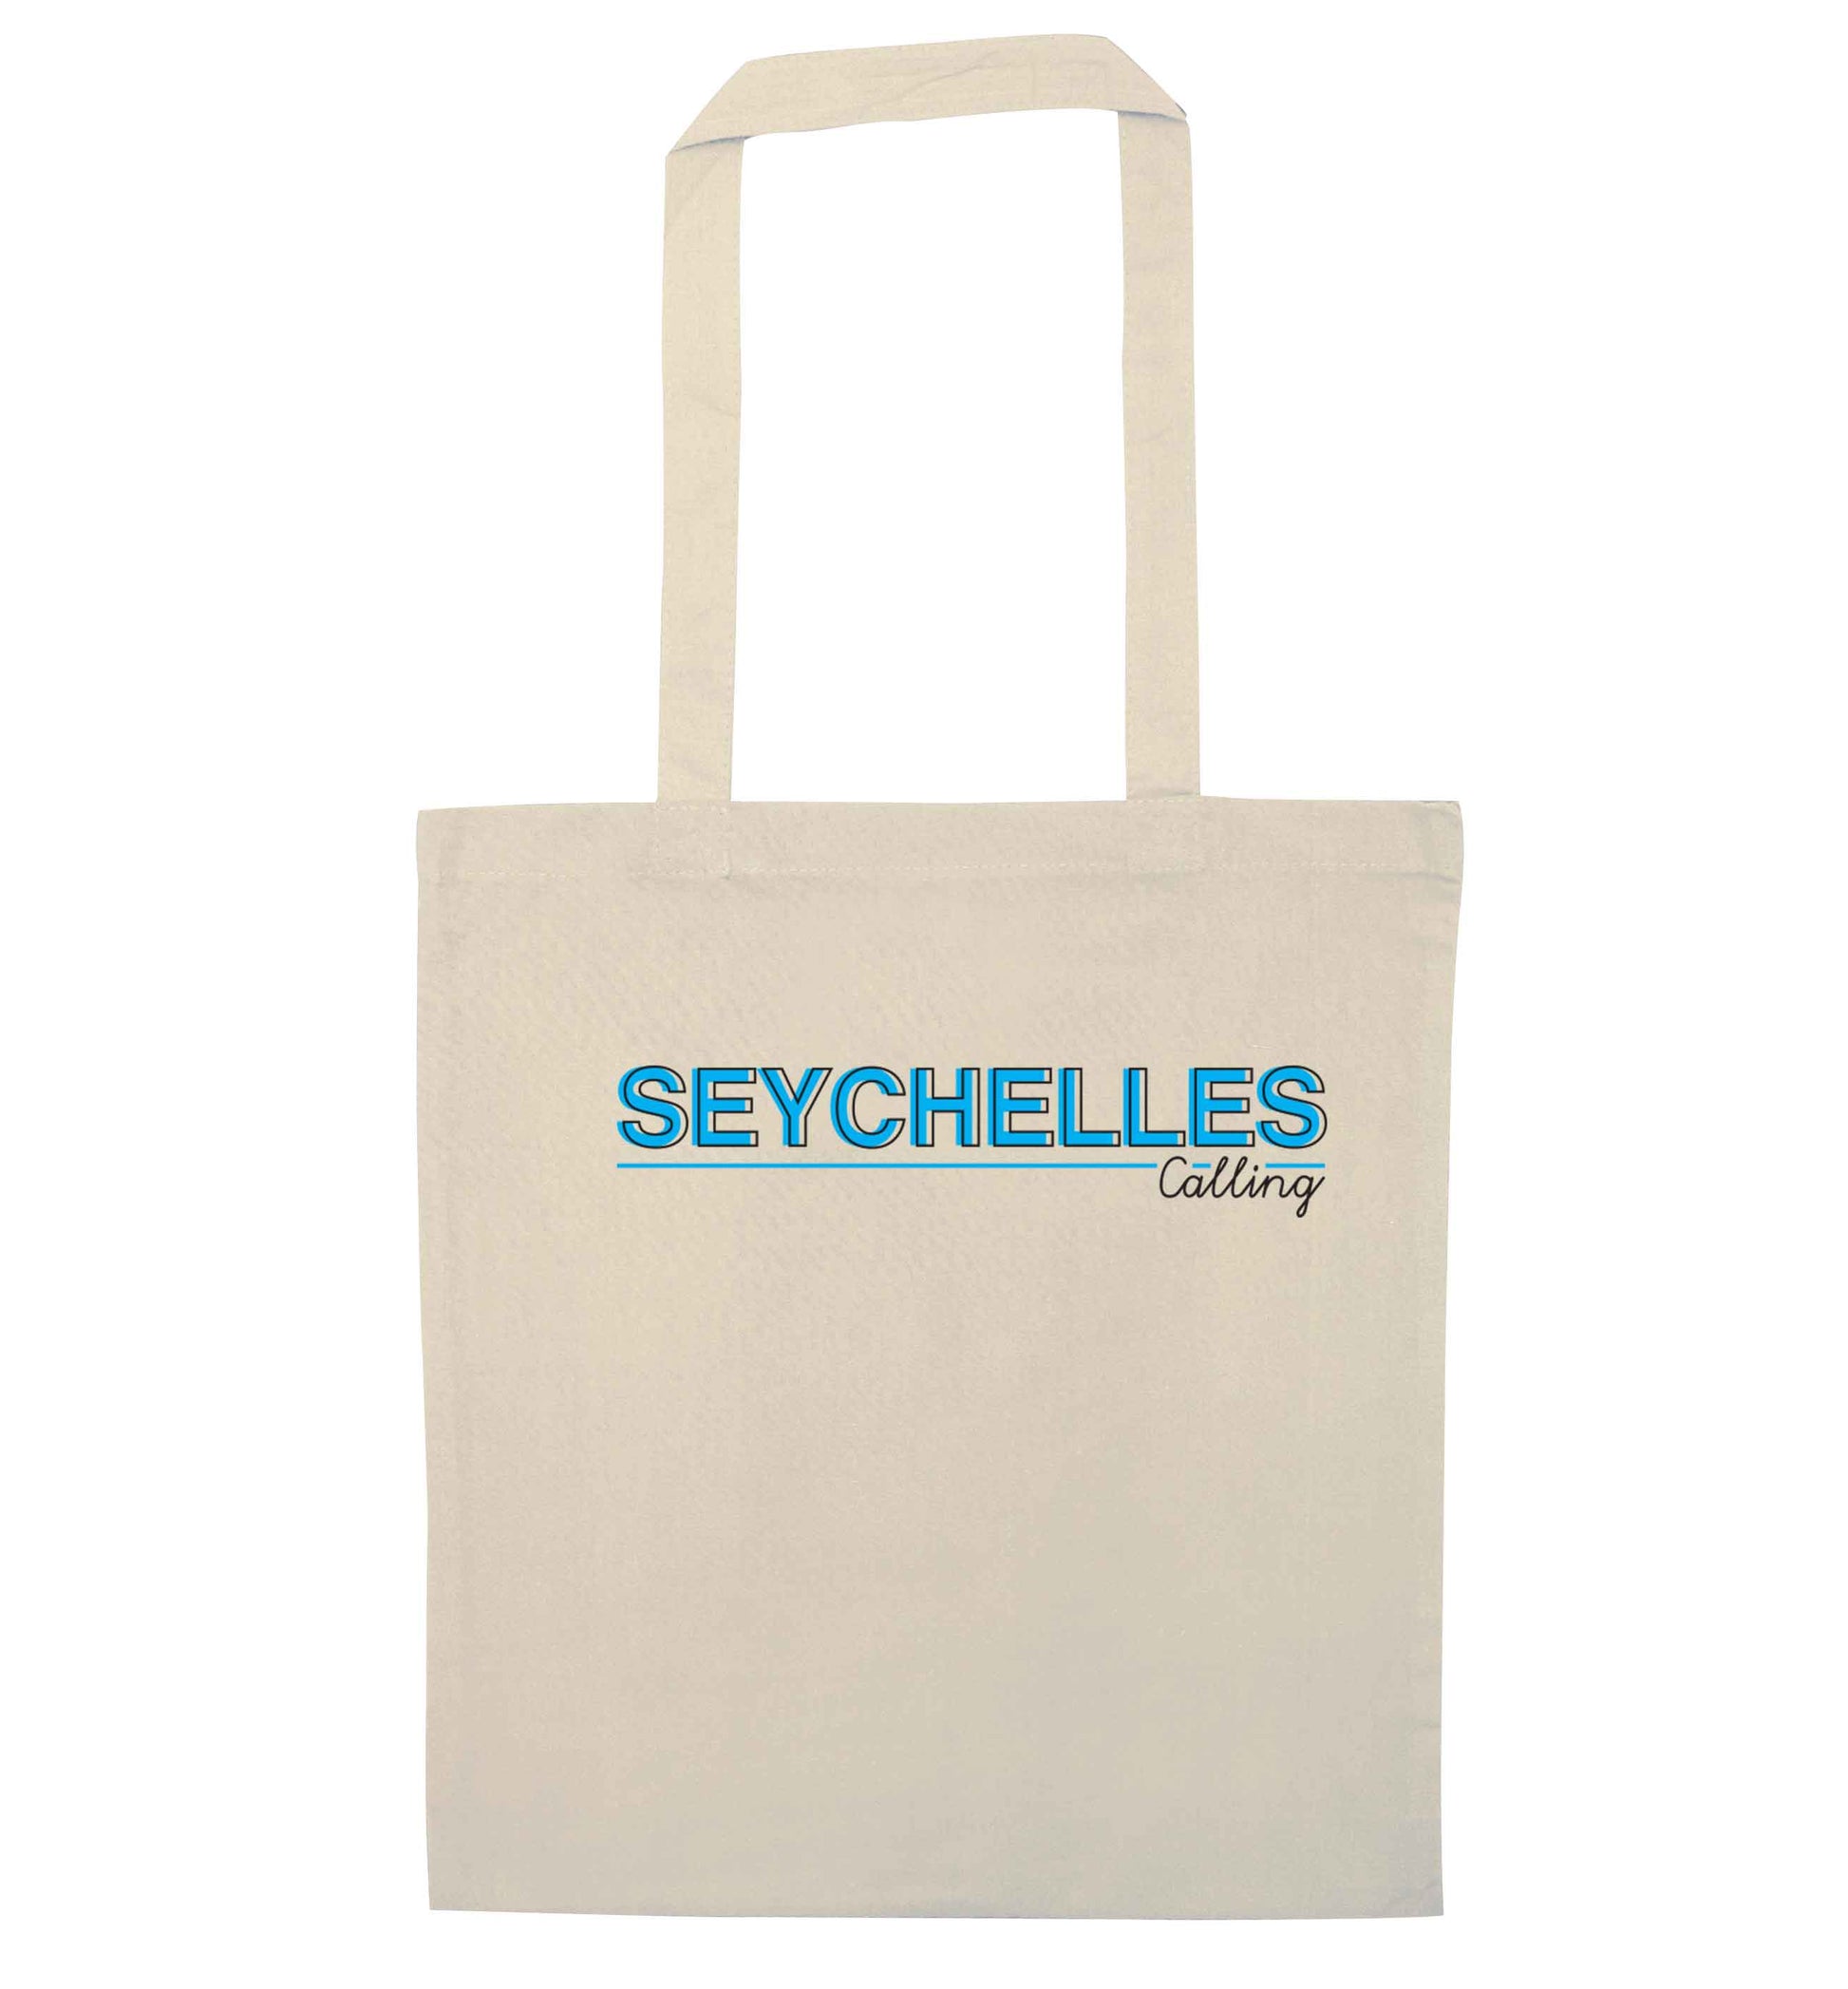 Seychelles calling natural tote bag